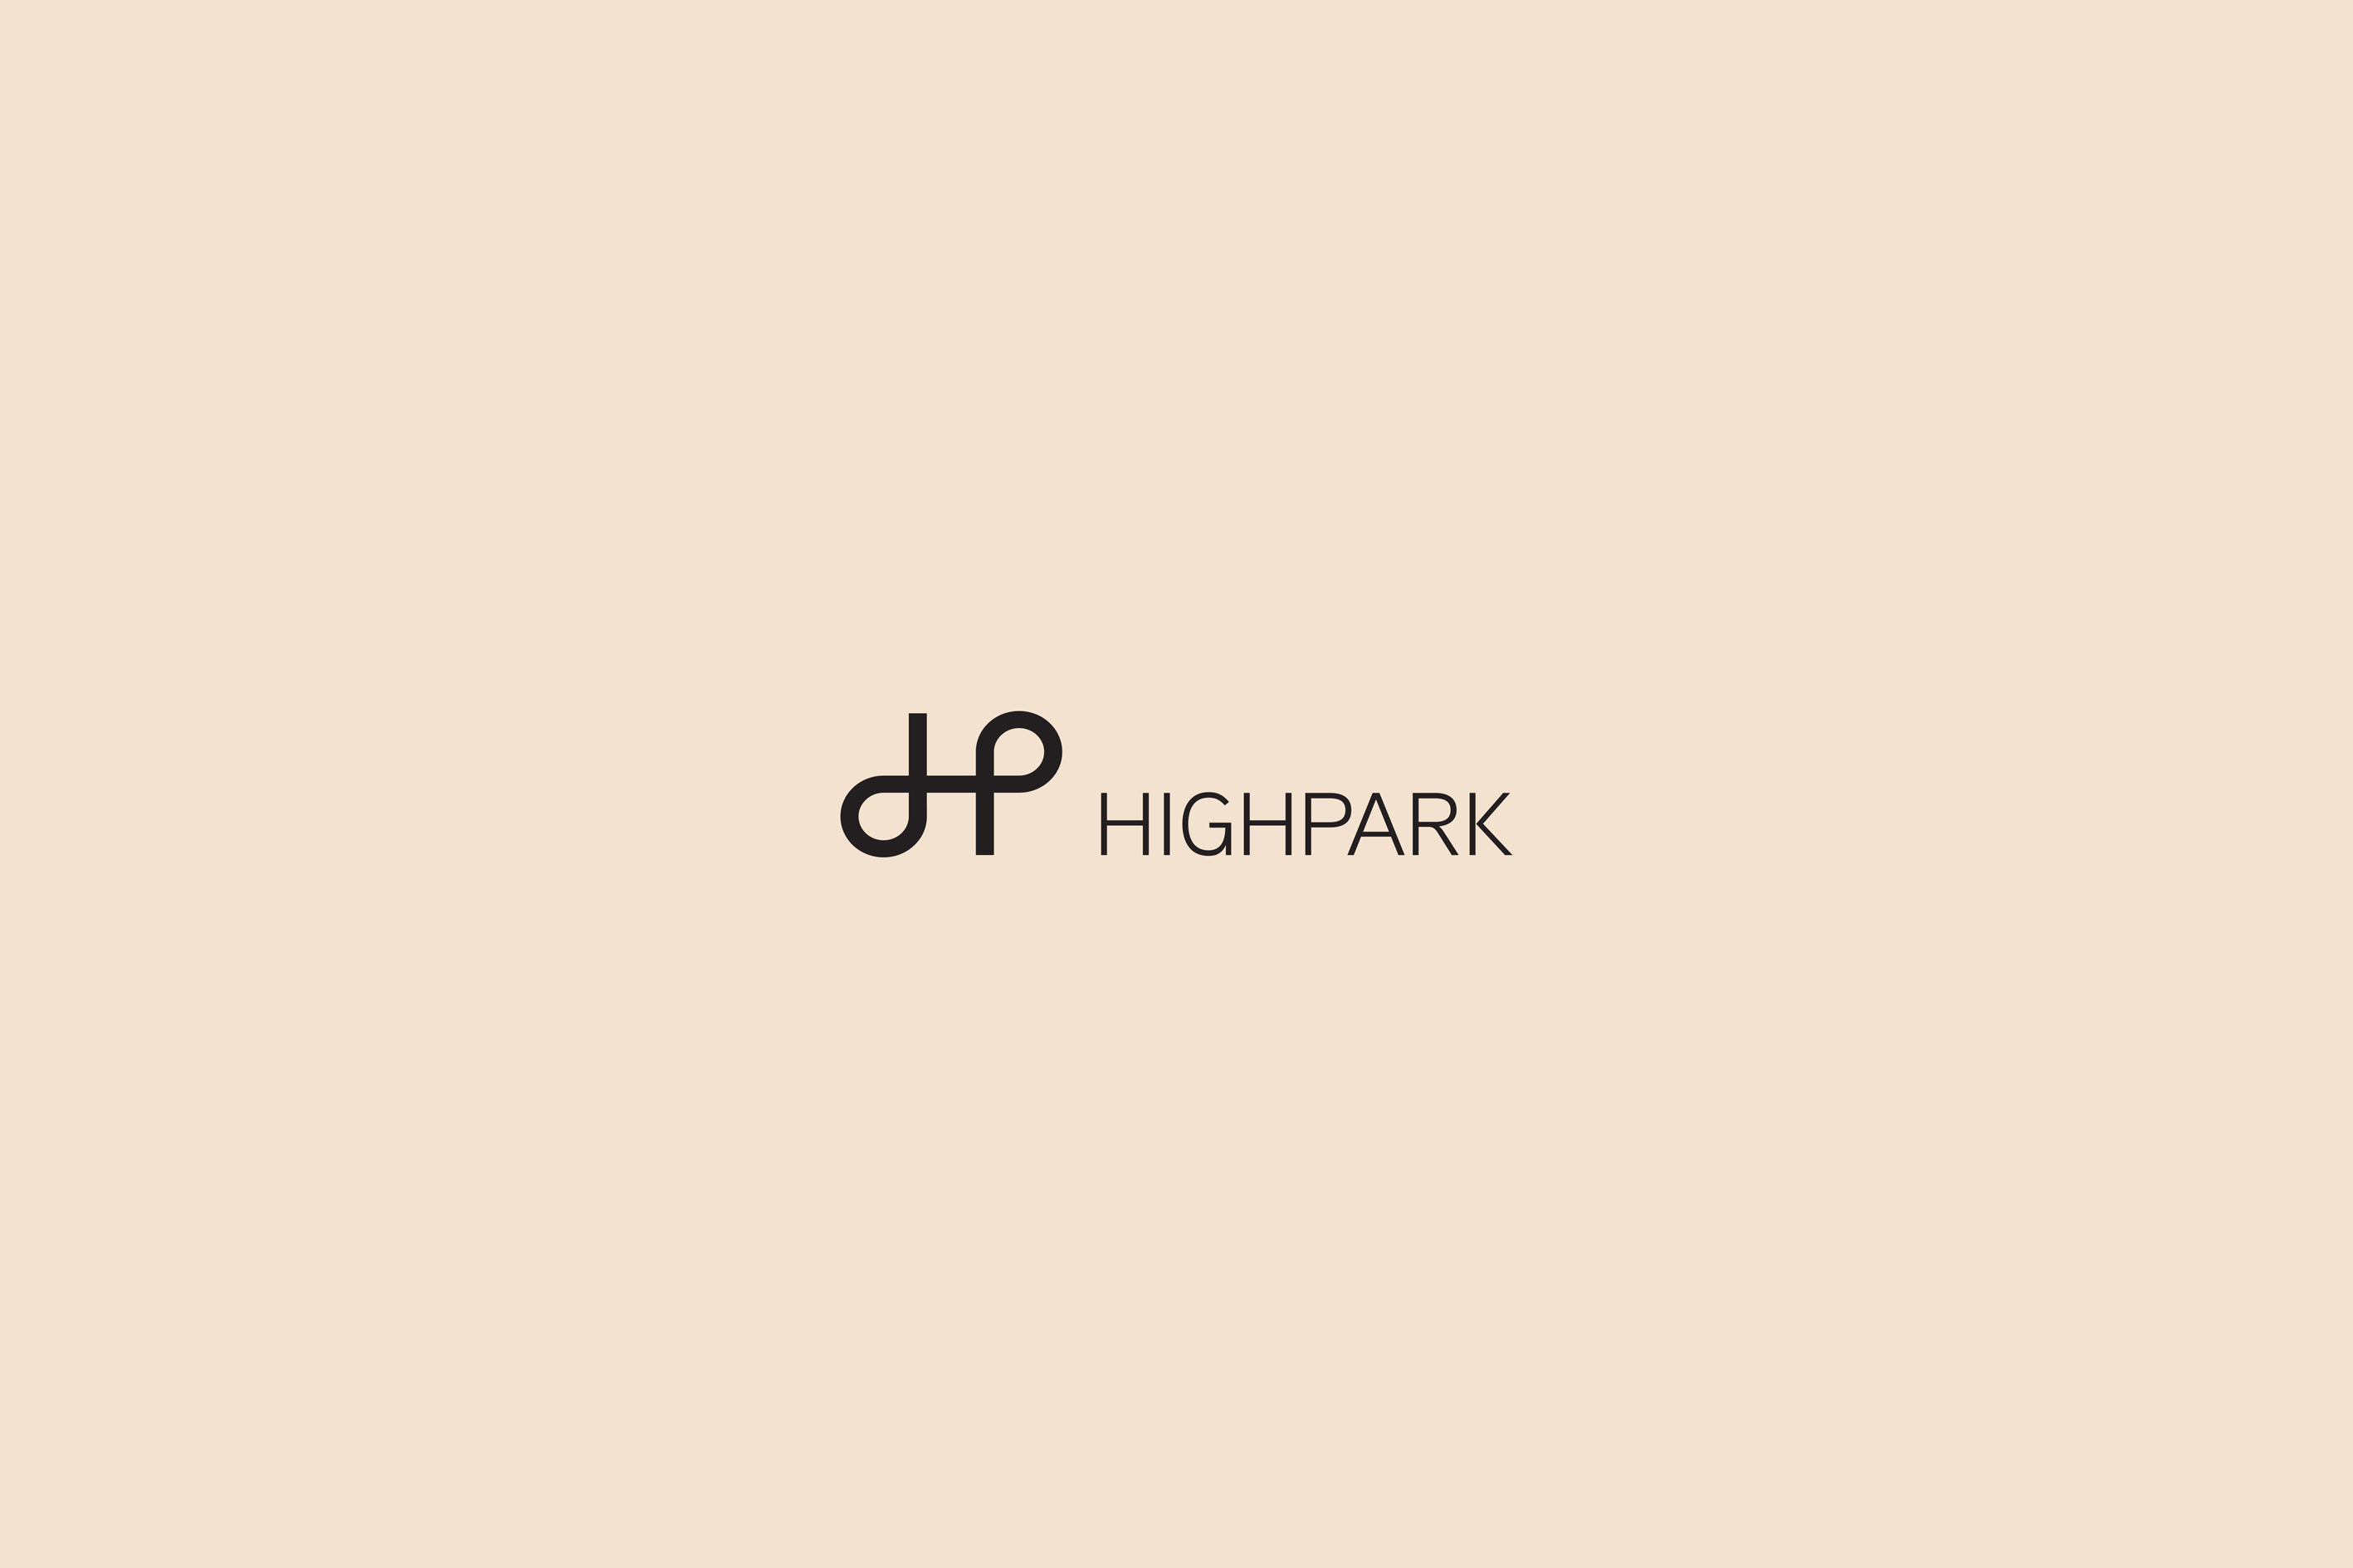 Highpark